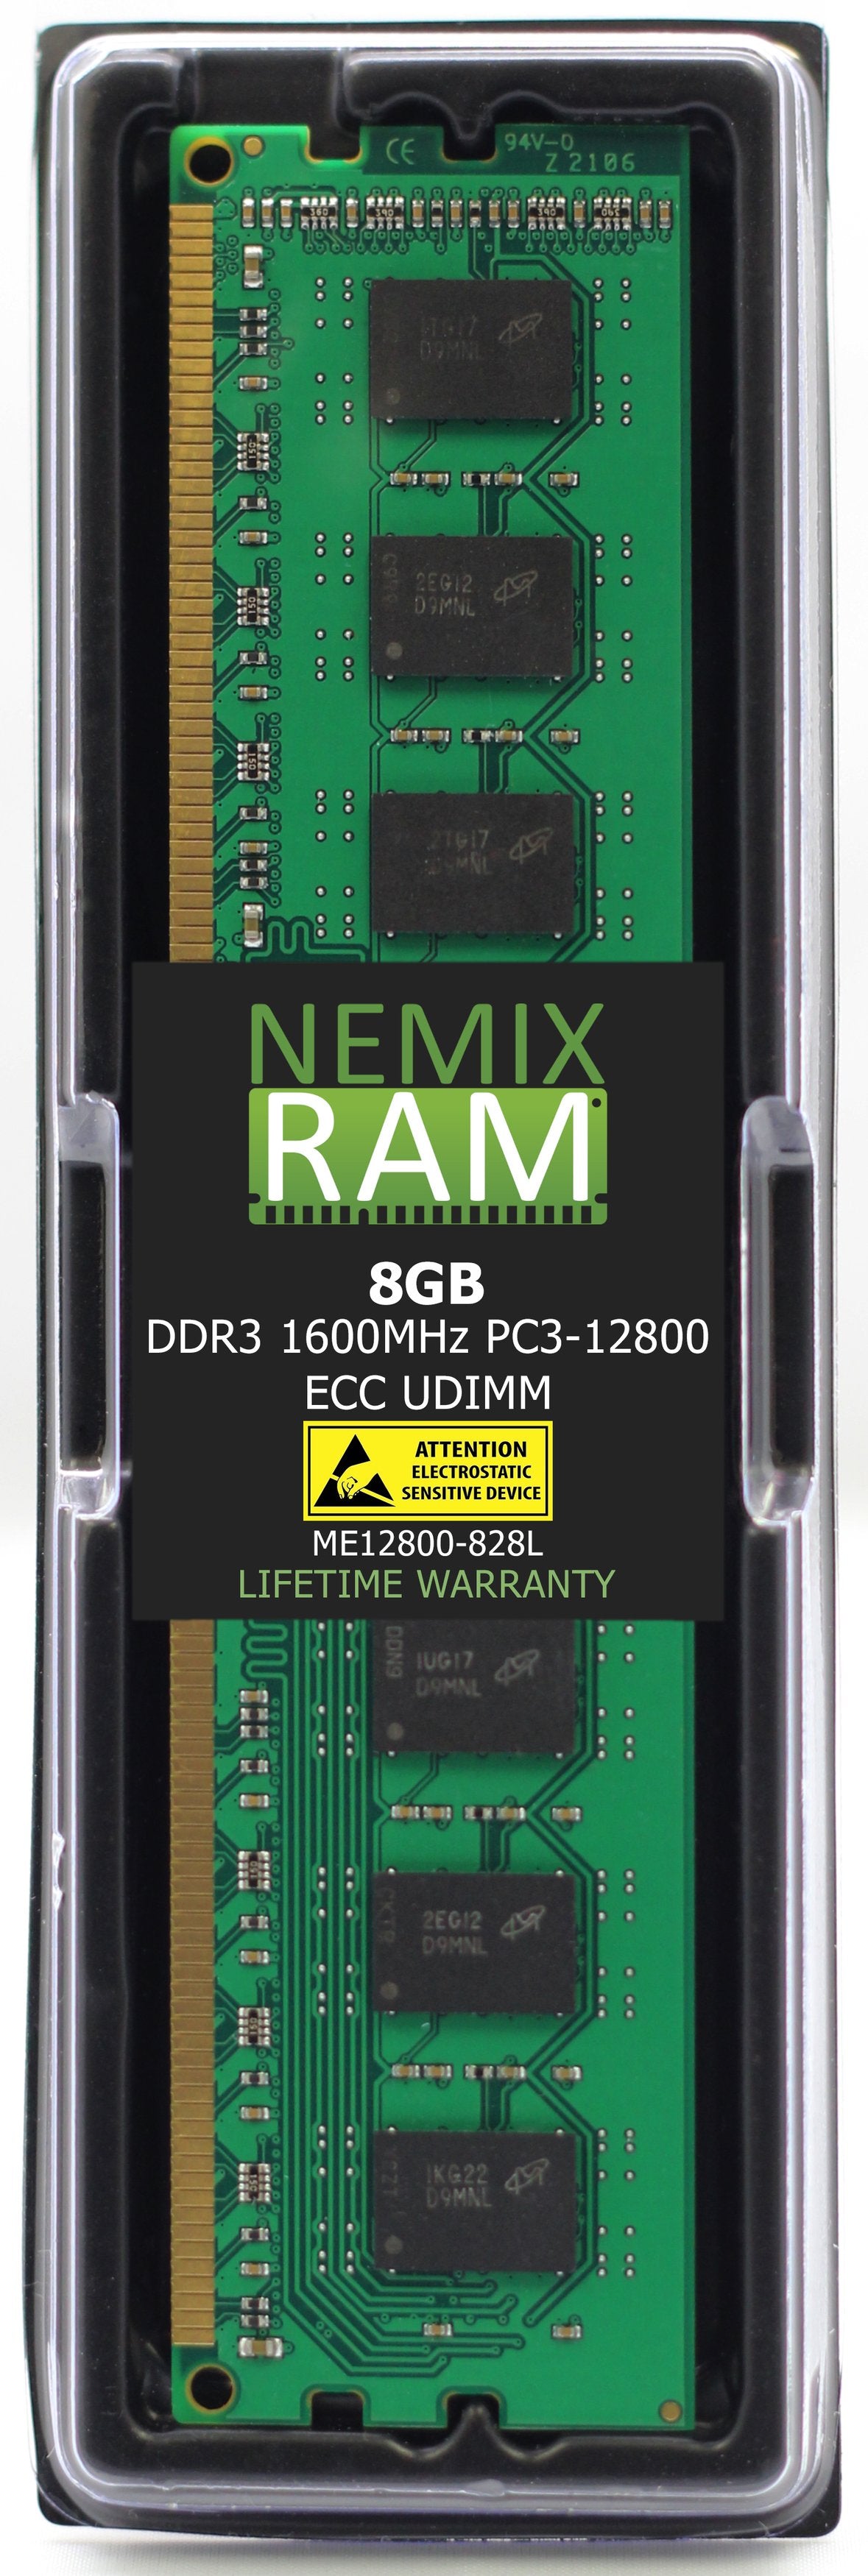 8GB DDR3 1600MHZ PC3-12800 ECC UDIMM Compatible with Supermicro MEM-DR380L-SL02-EU16